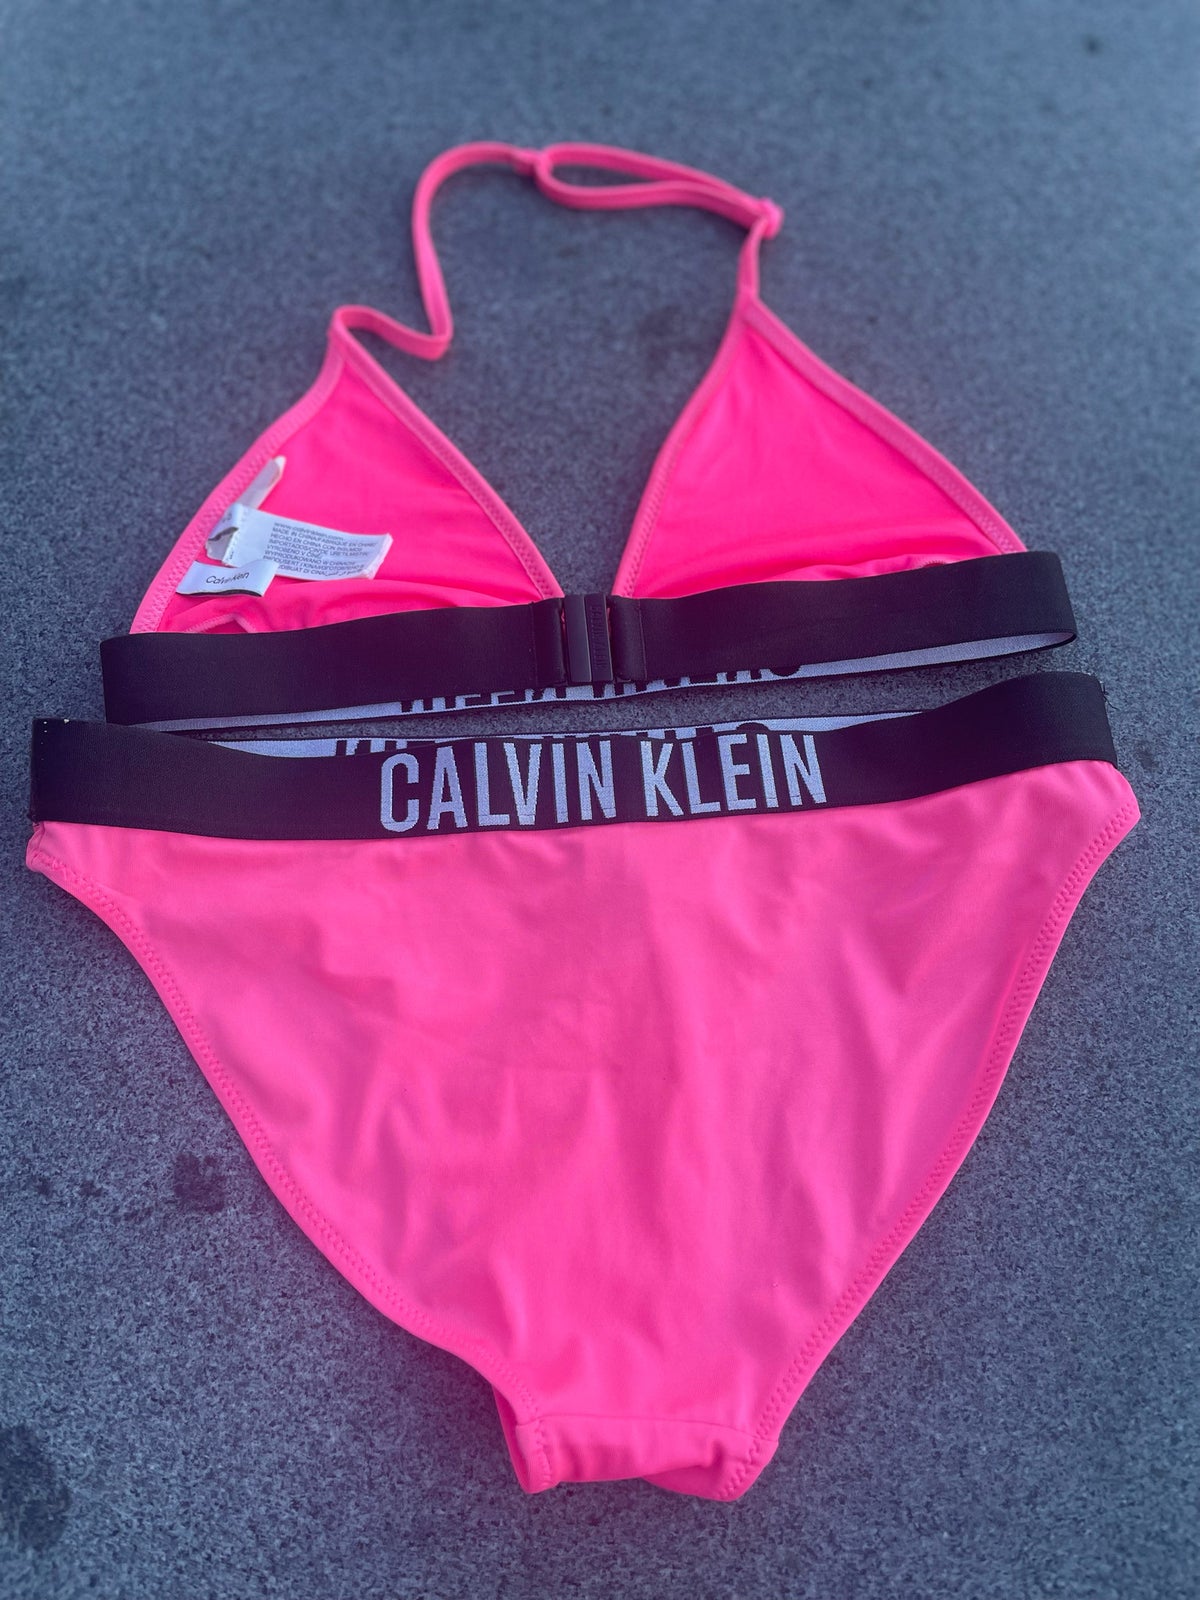 Blandet tøj, Bikini, Calvin Klein